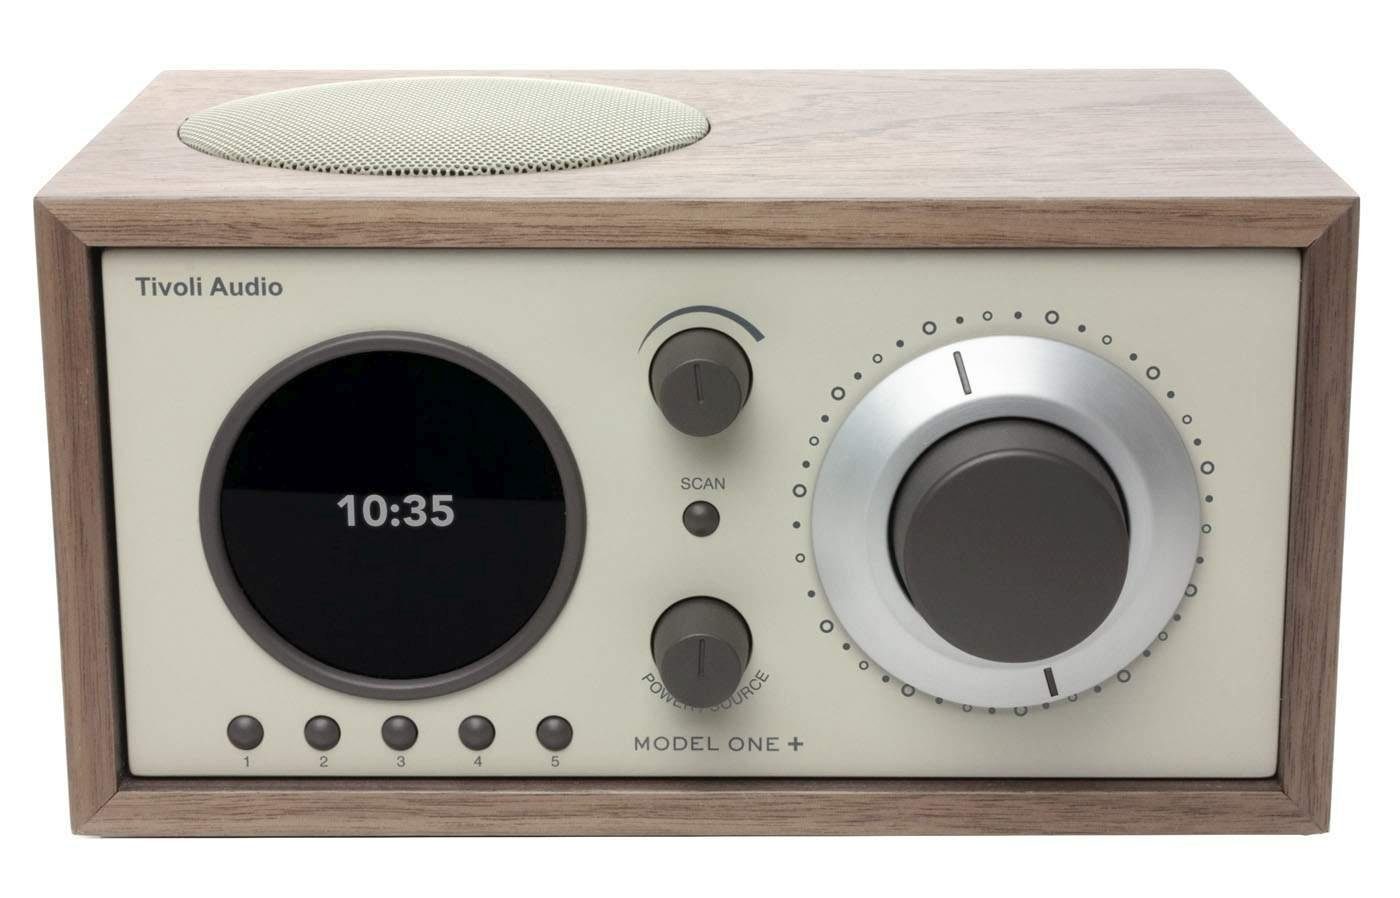 Tivoli Audio Model ONE+ Digitalradio mit Wecker,Display DAB+ (DAB) FM-Tuner, Walnuss/beige Uhranzeige, (DAB),FM-Tuner, Bluetooth-Empfänger, (Digitalradio und Fernbedienung) Digitalradio